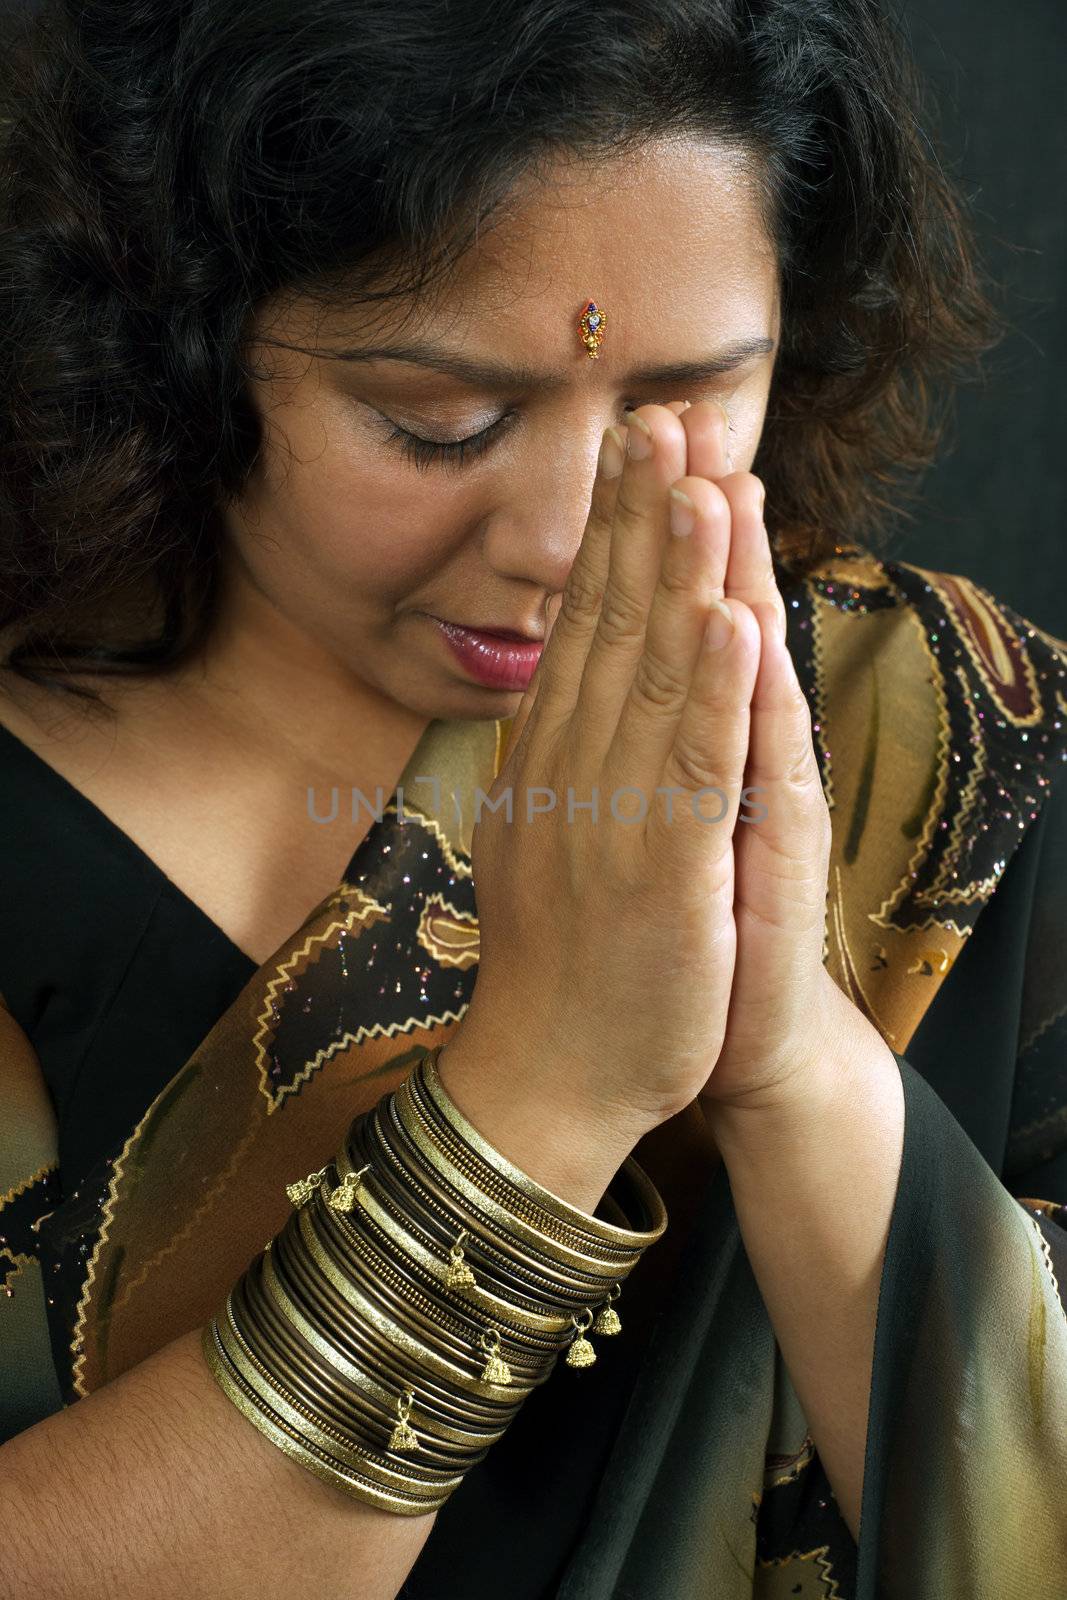 A beautiful Indian woman wearing a traditional sari and praying.
